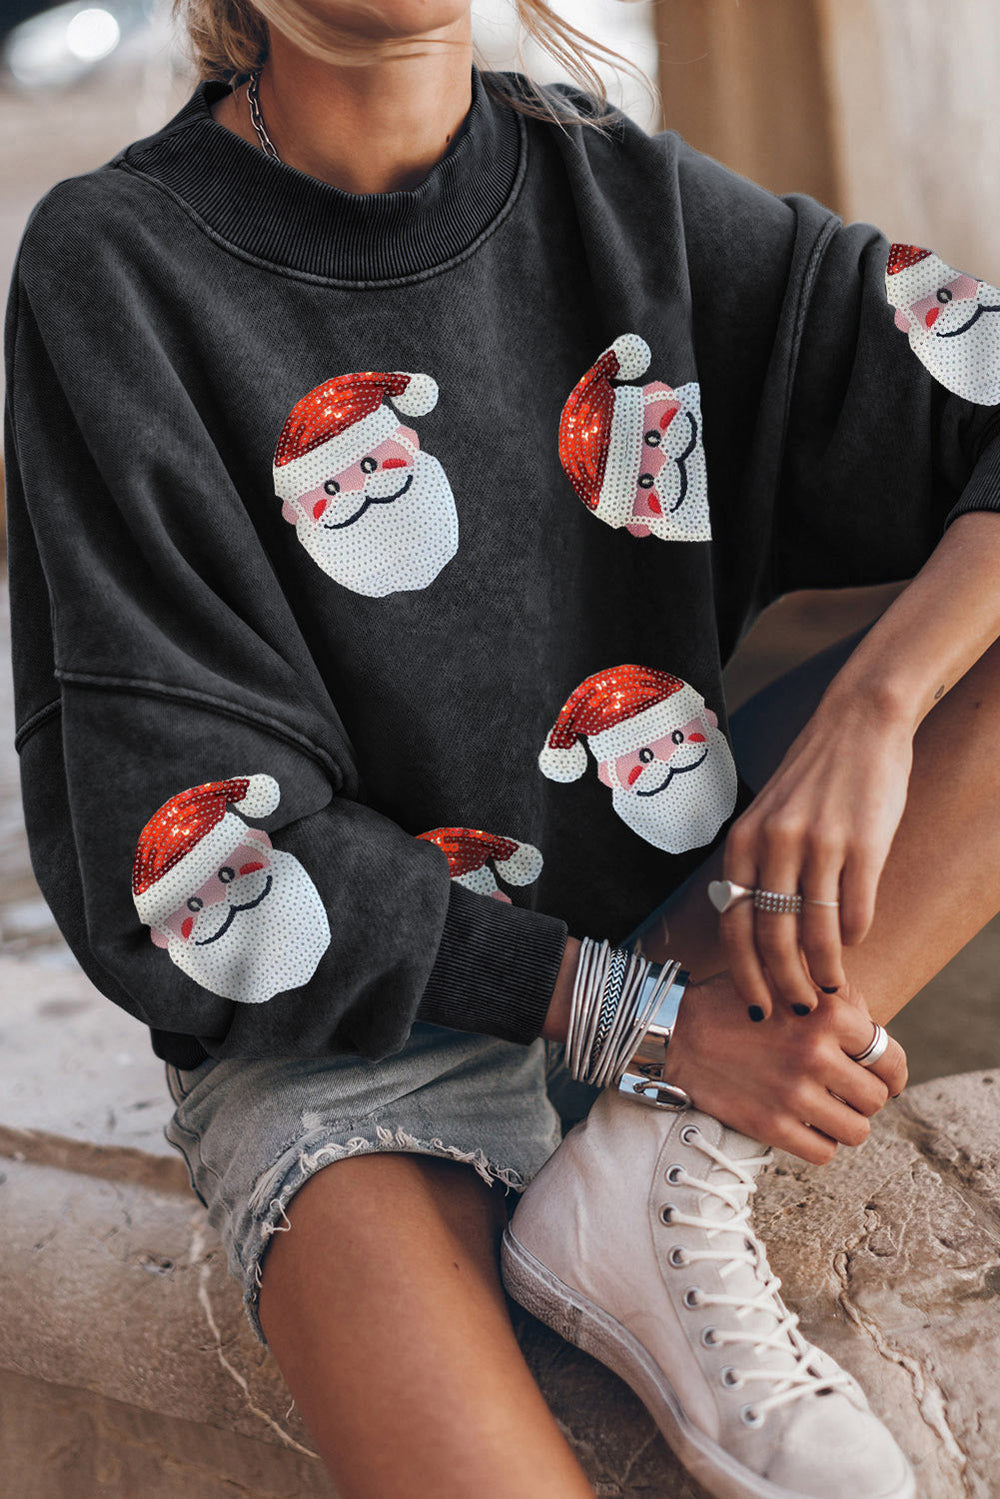 Black Washed Graphic Sequins Santa Claus Christmas Sweatshirt